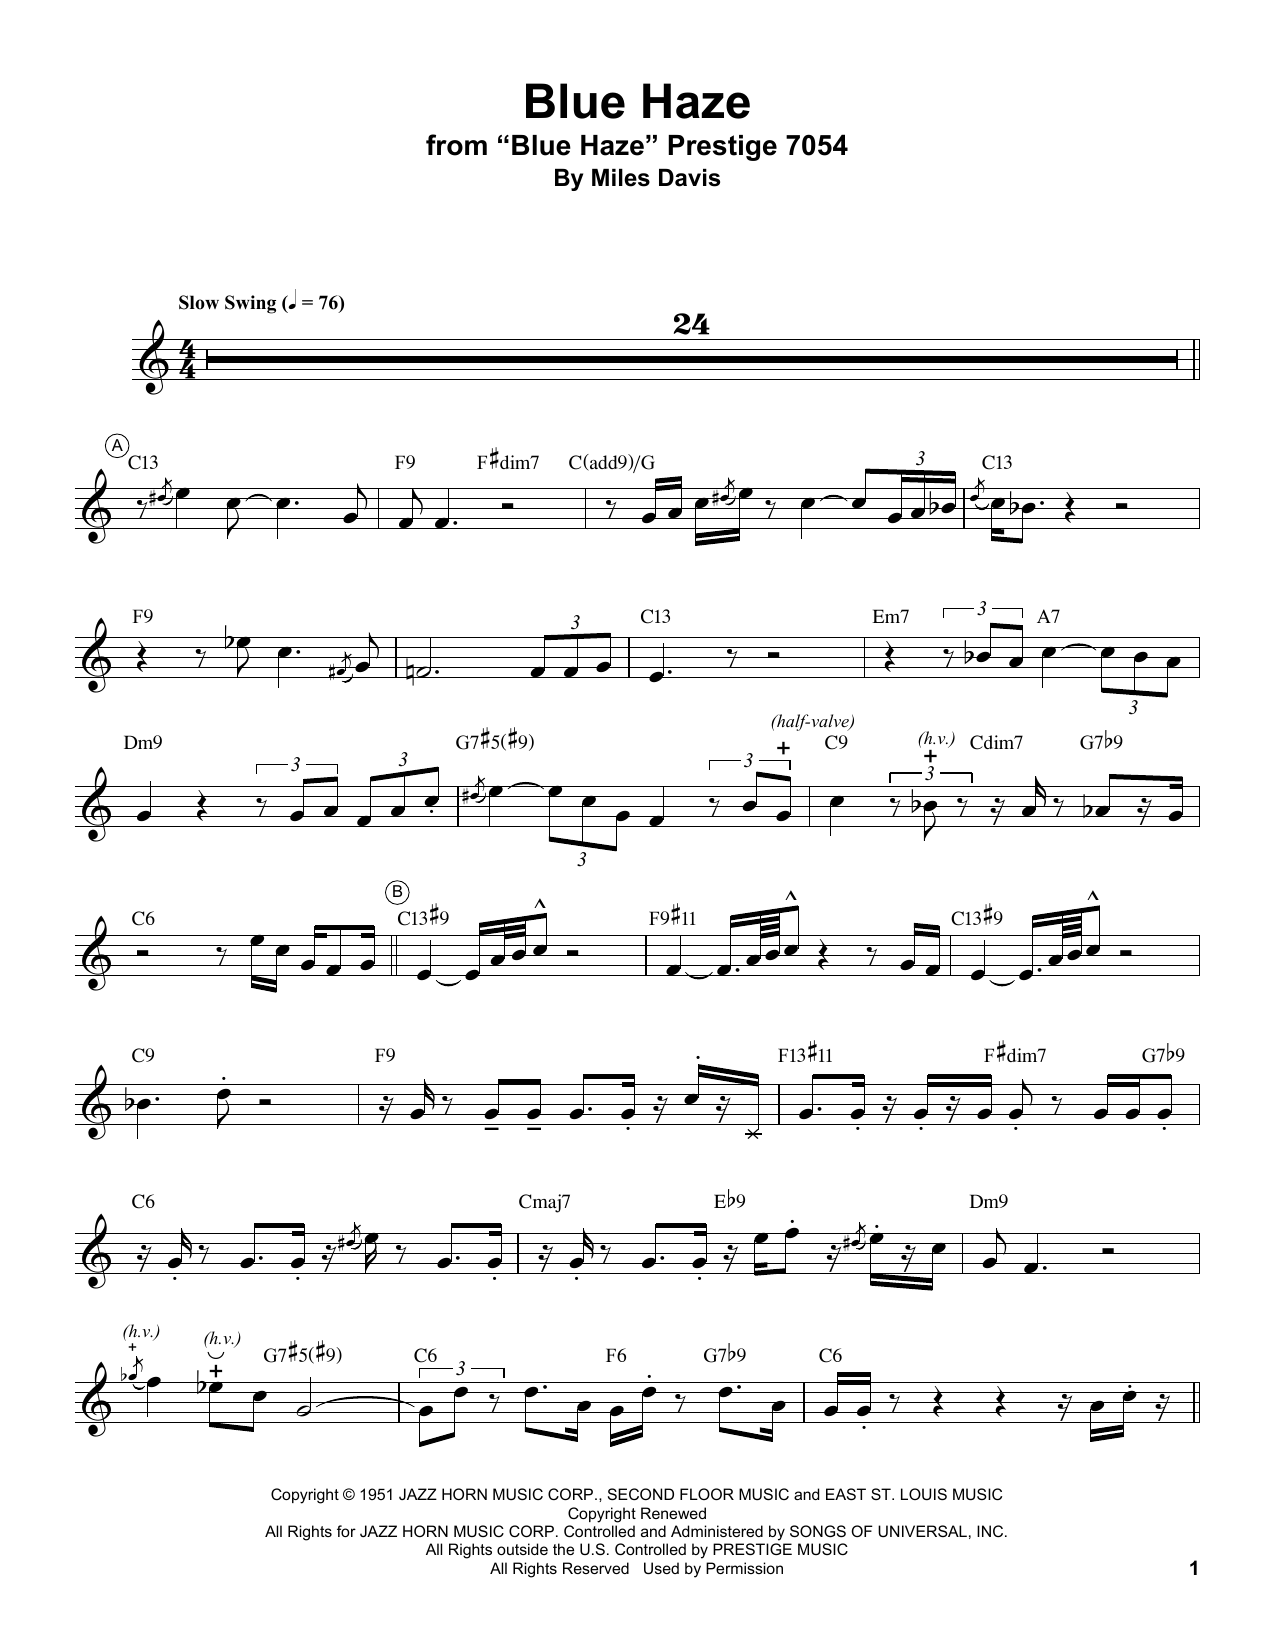 Miles Davis Blue Haze Sheet Music Notes & Chords for Trumpet Transcription - Download or Print PDF